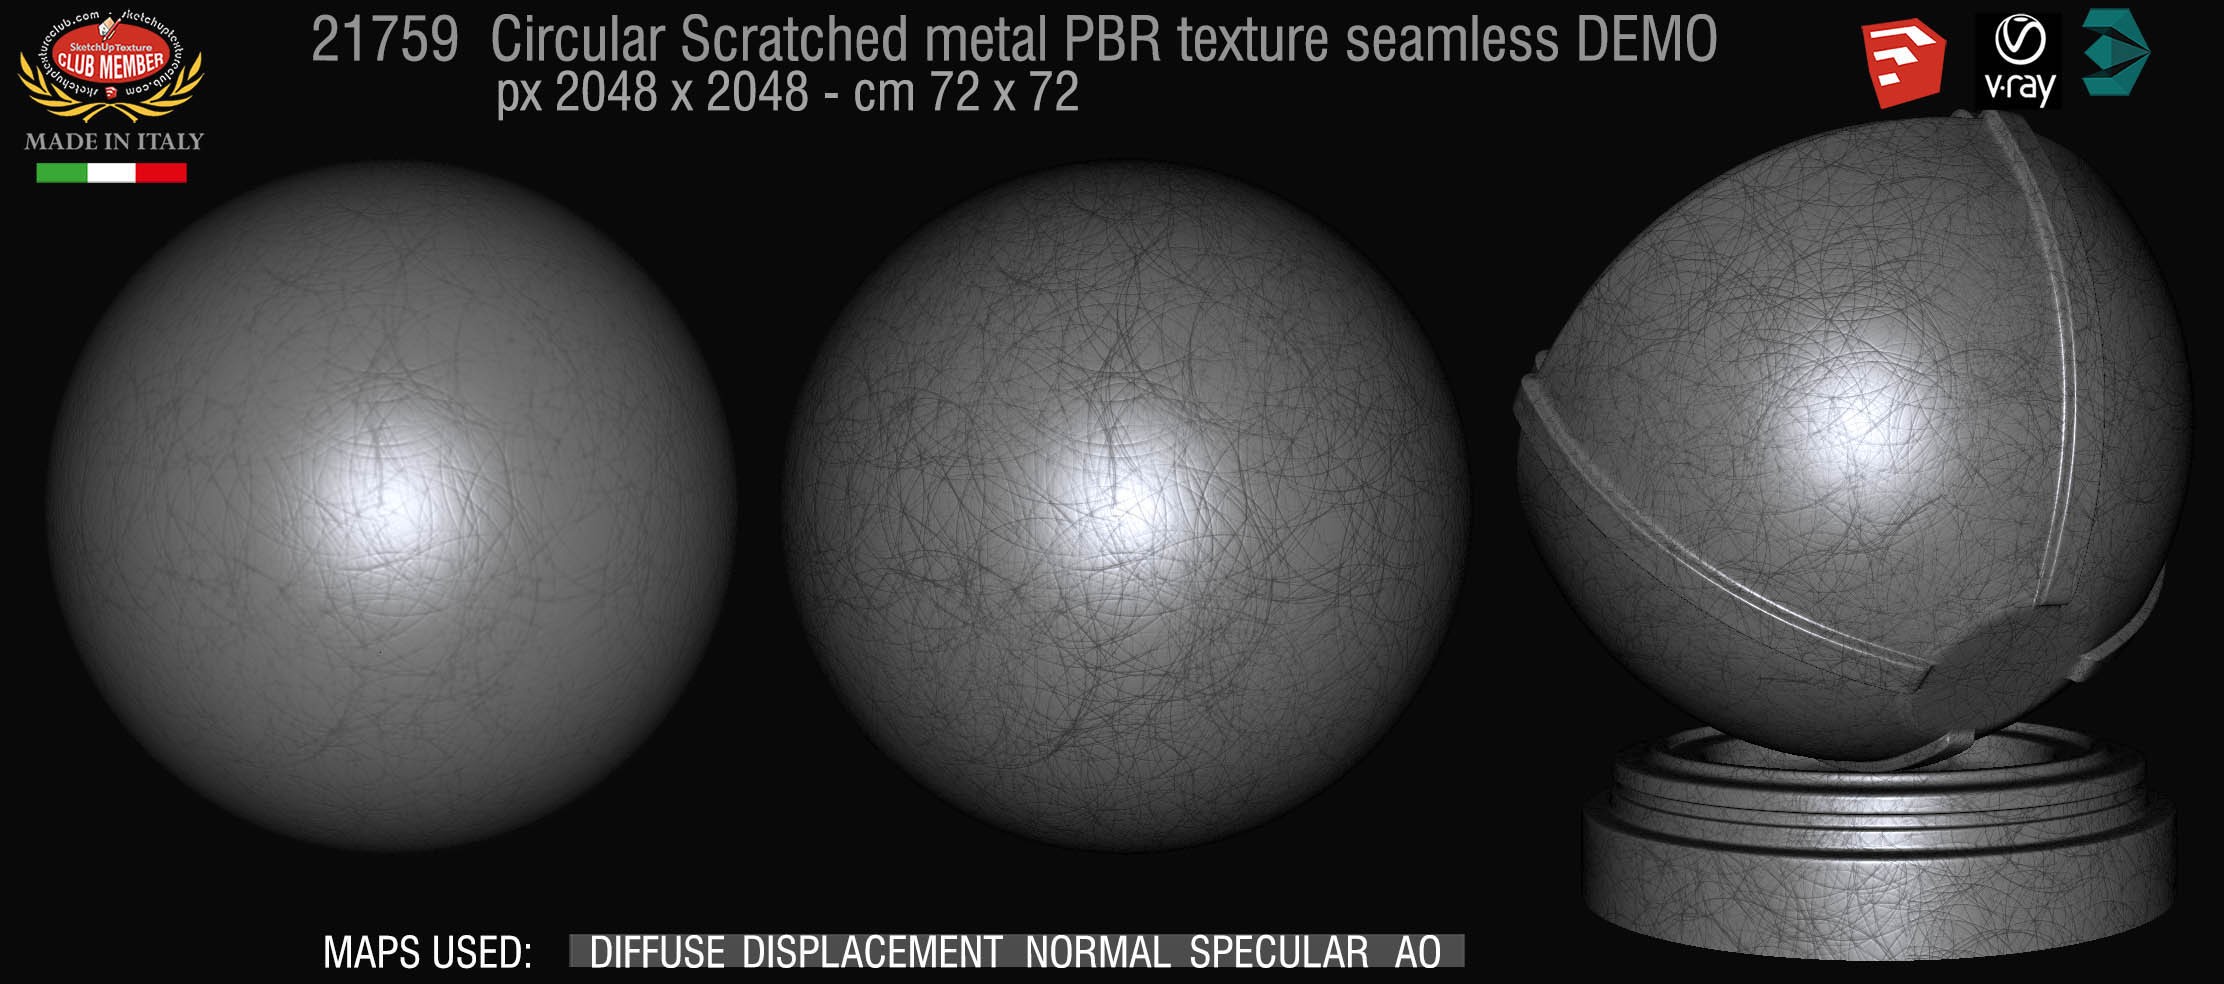 21759 79_Circular Scratched metal PBR texture seamless DEMO